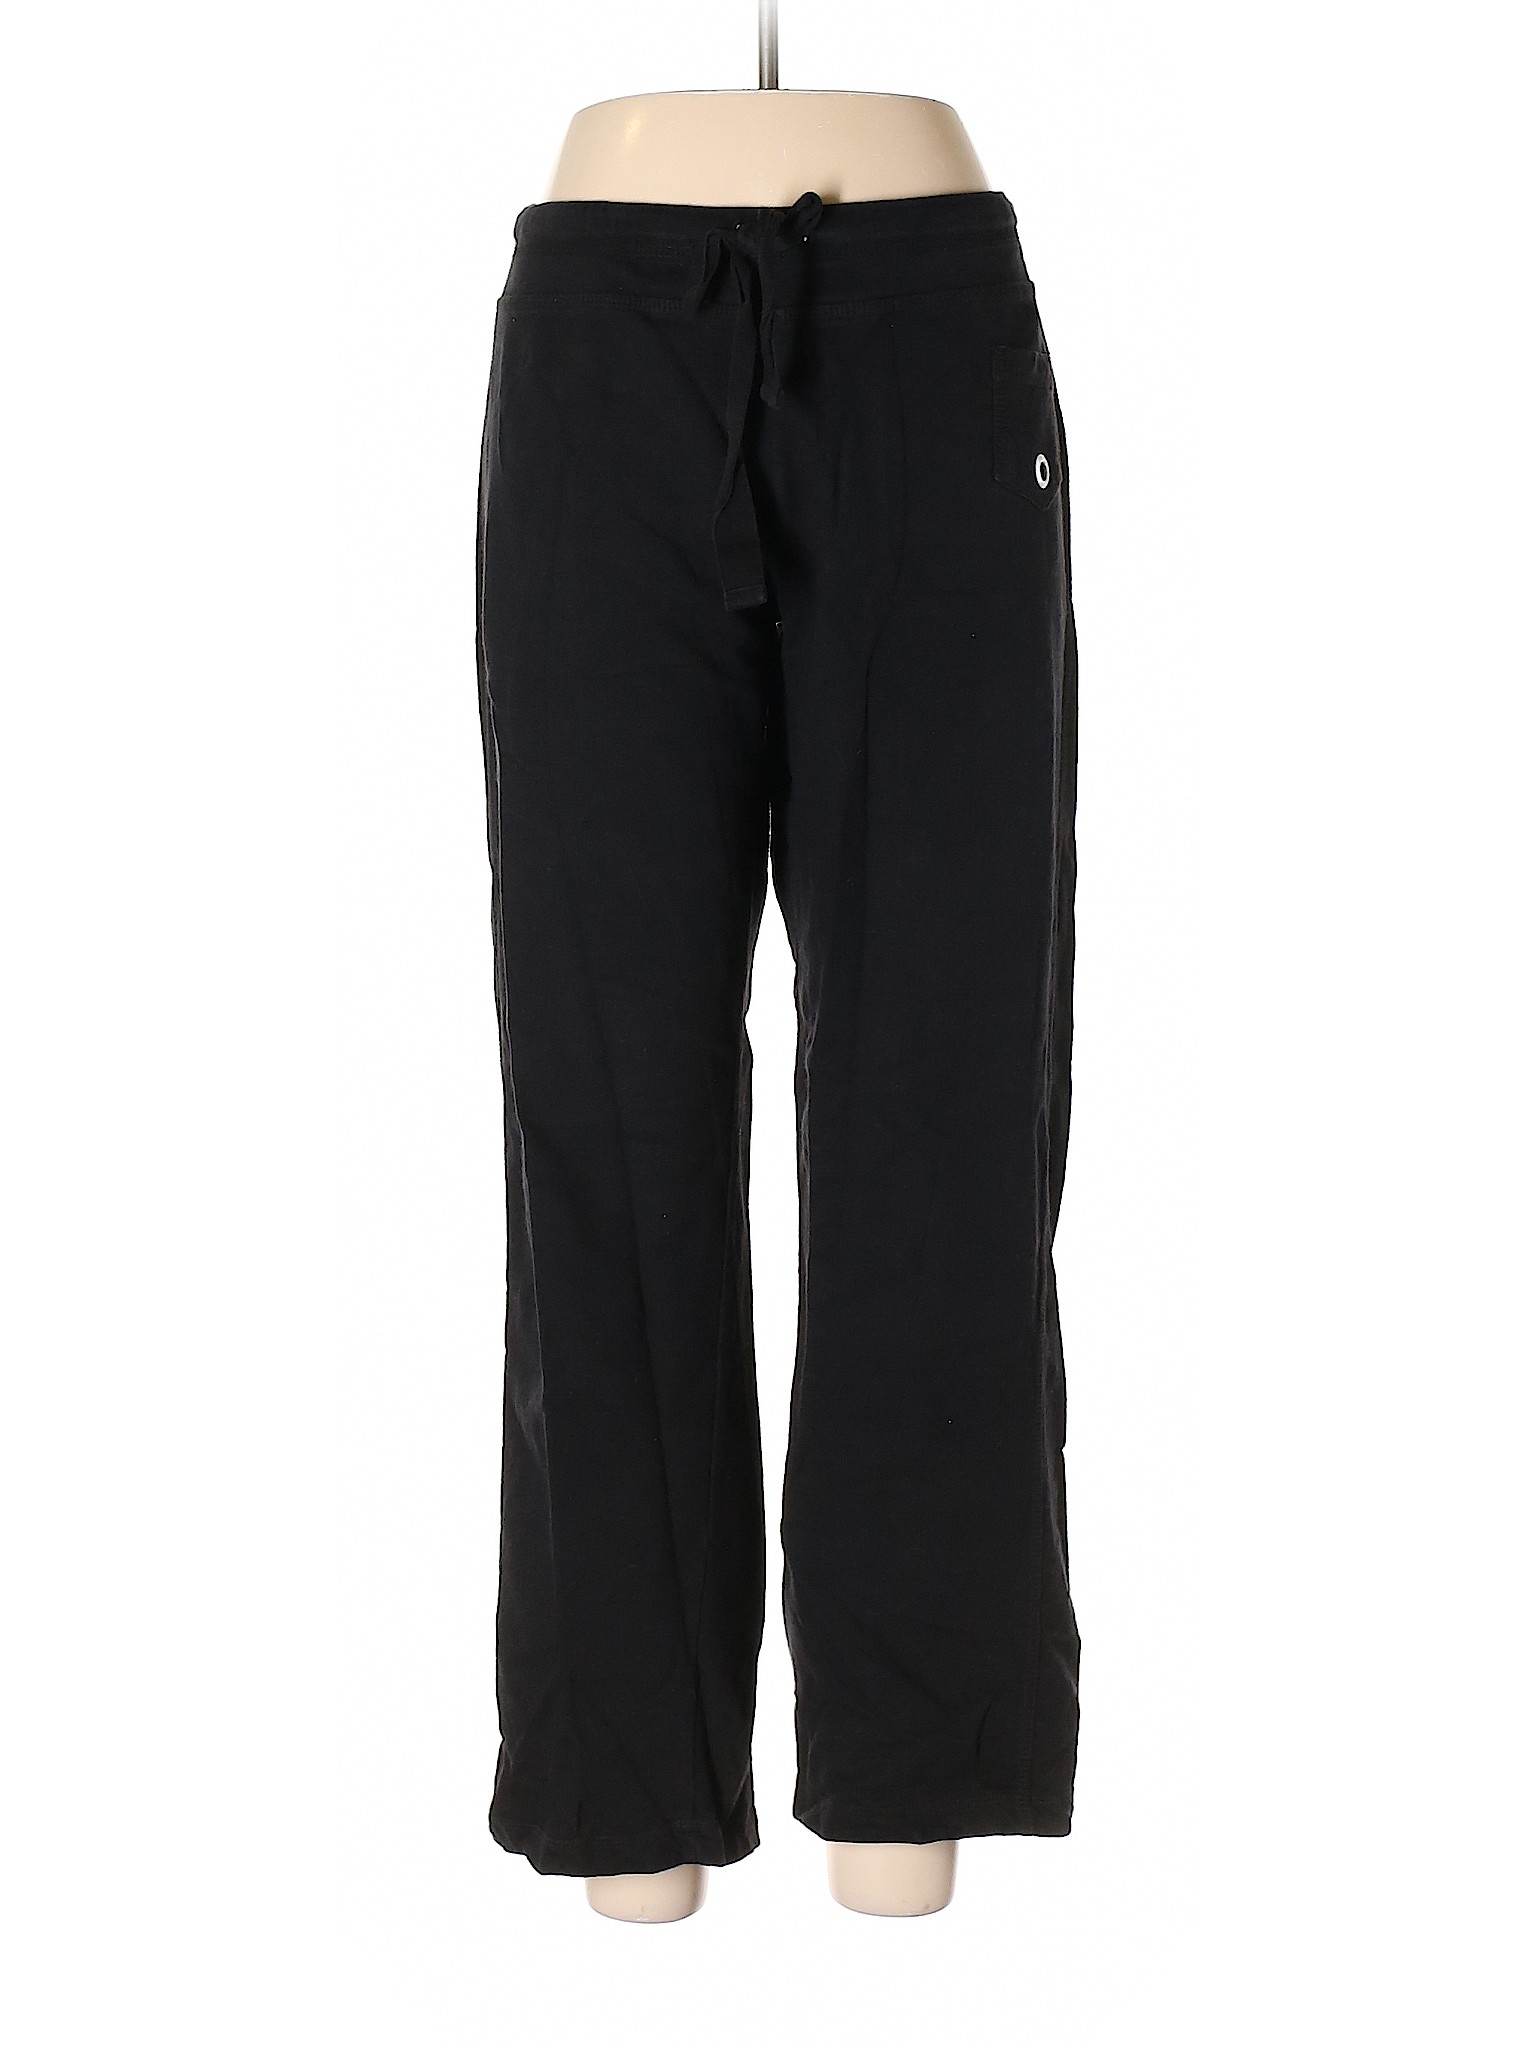 Three Hearts Solid Black Sweatpants Size XL - 81% off | thredUP